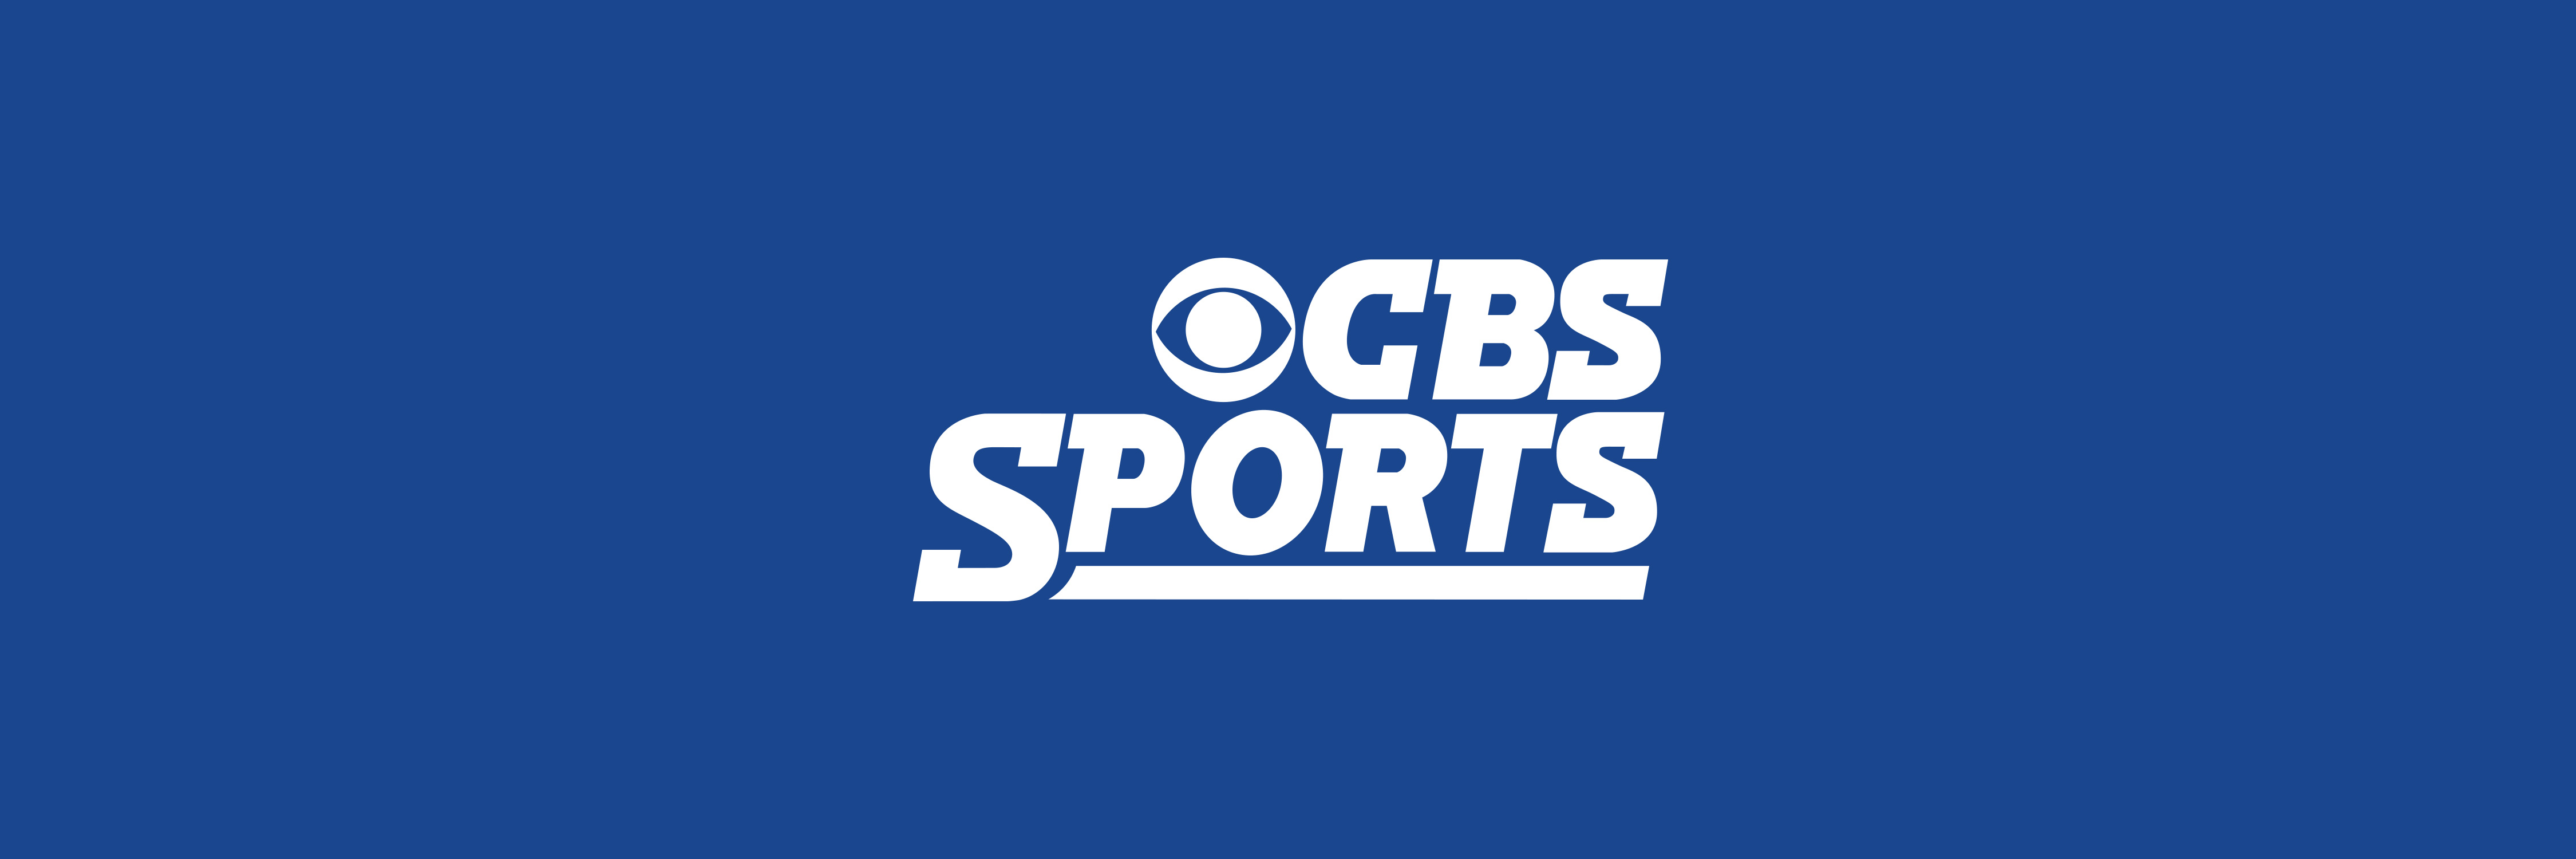 CBS Sports | pemdesigns